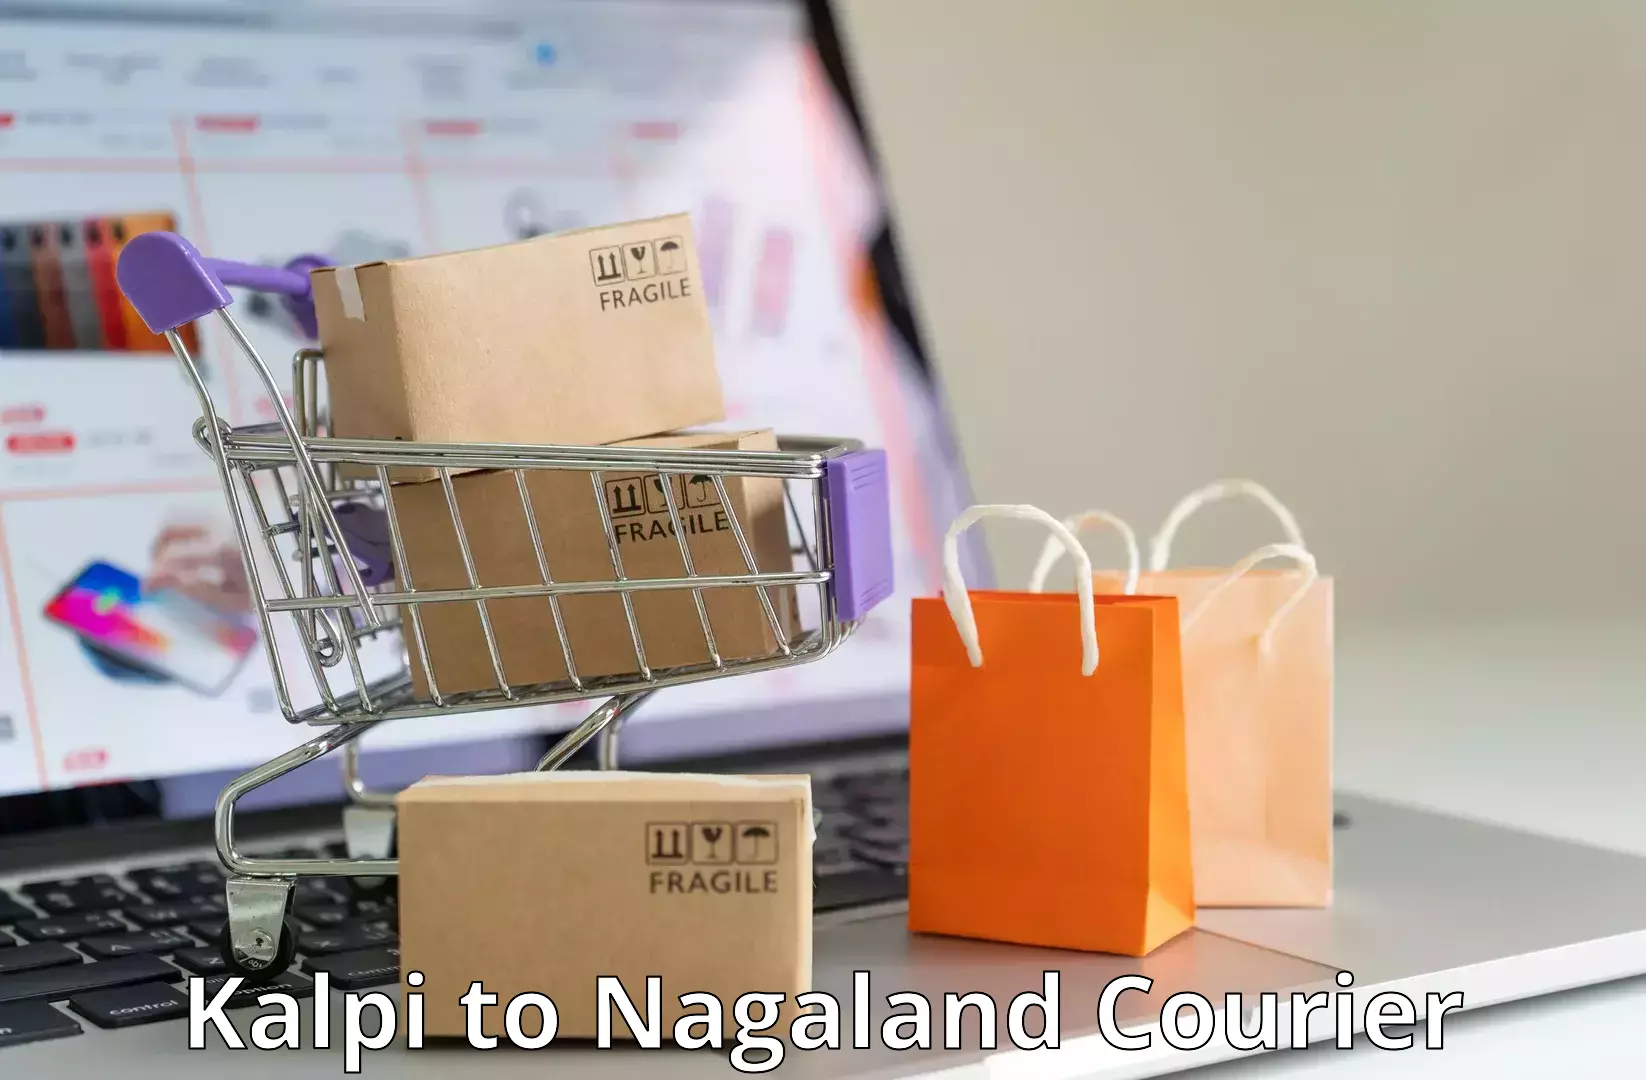 Modern delivery technologies Kalpi to Nagaland